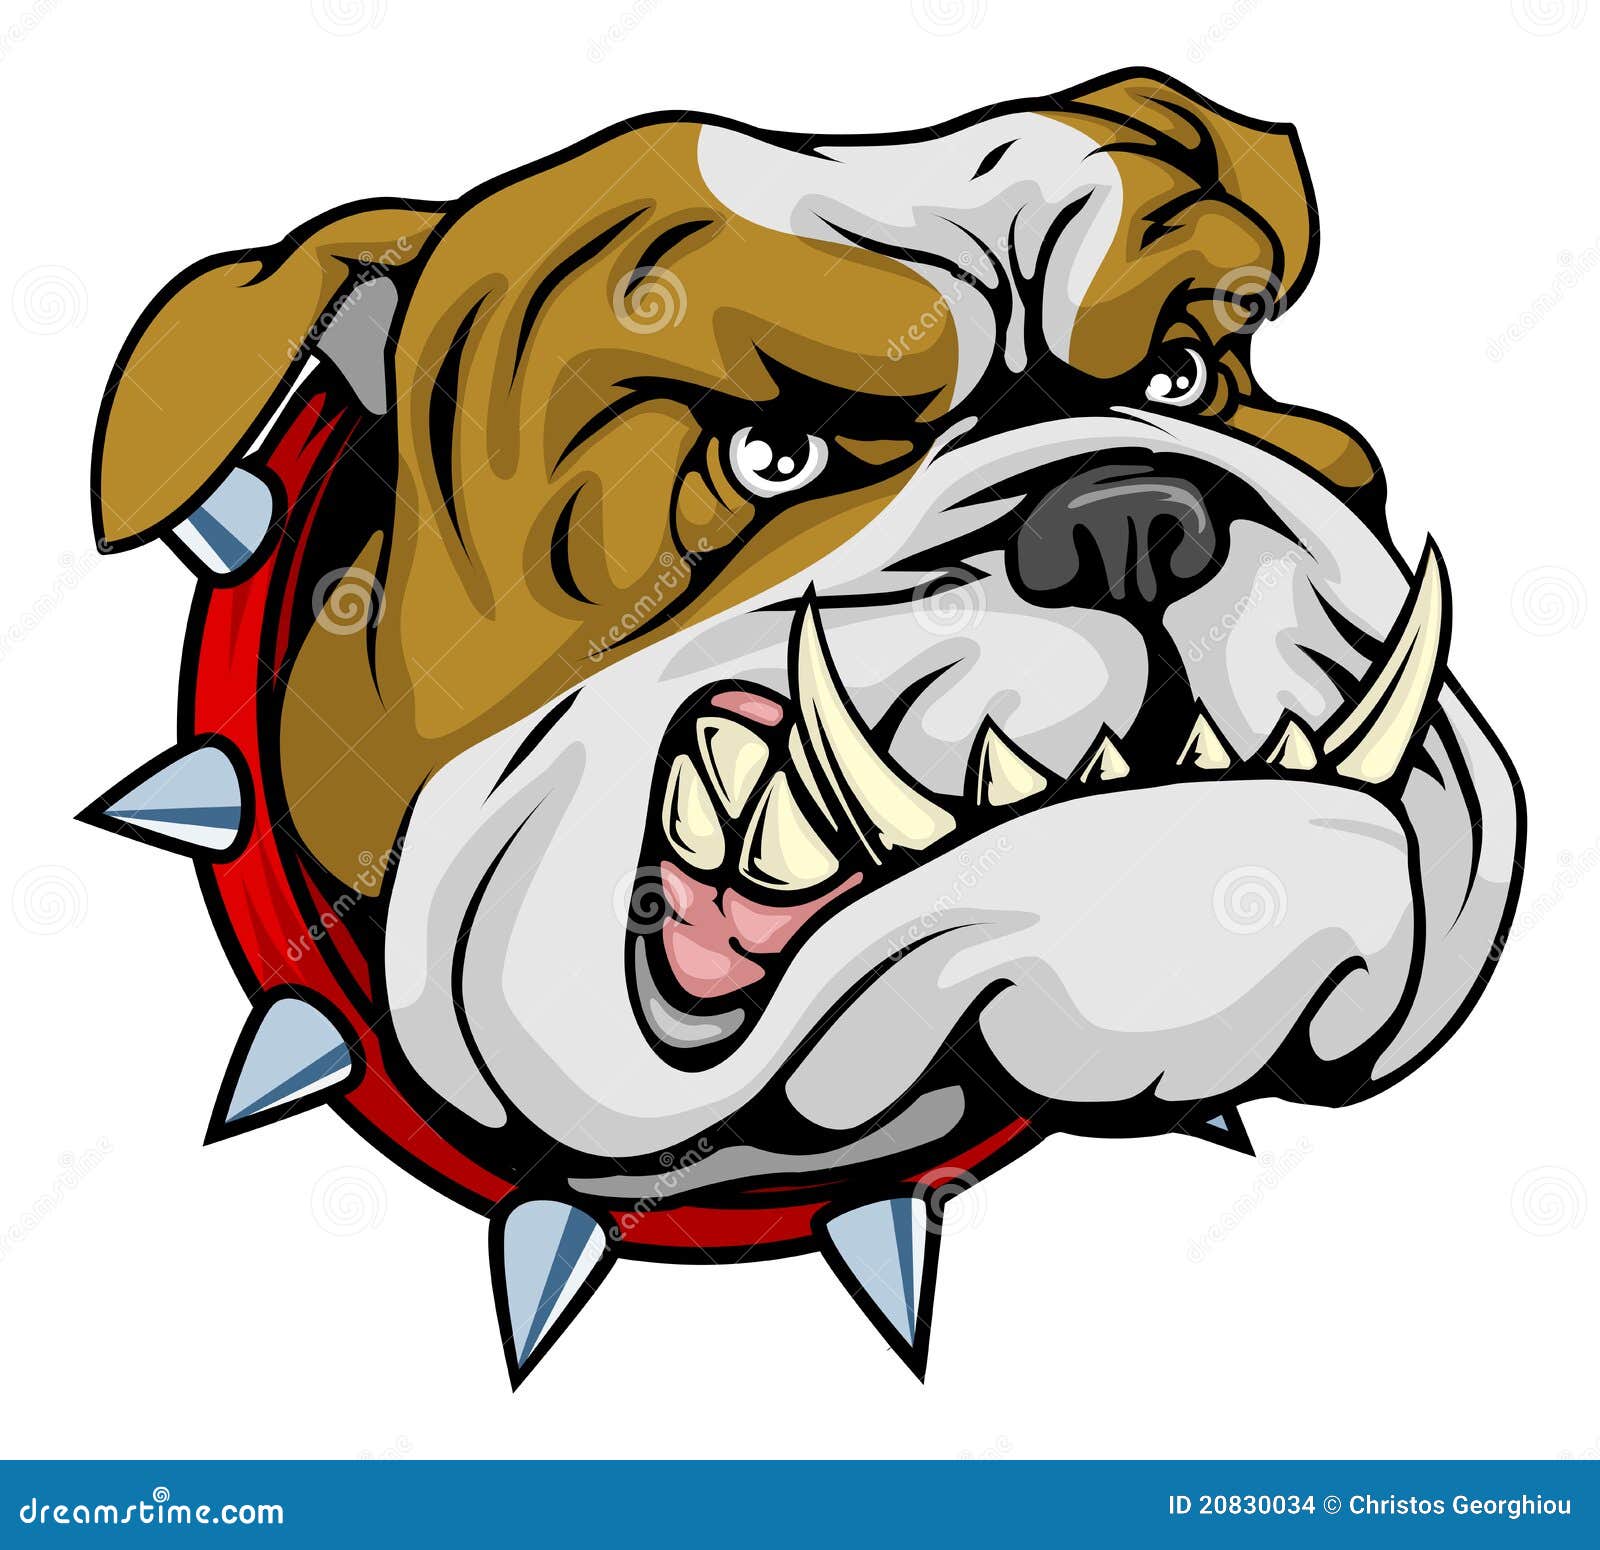 Mean Bulldog Mascot Illustration Stock Images - Image: 20830034